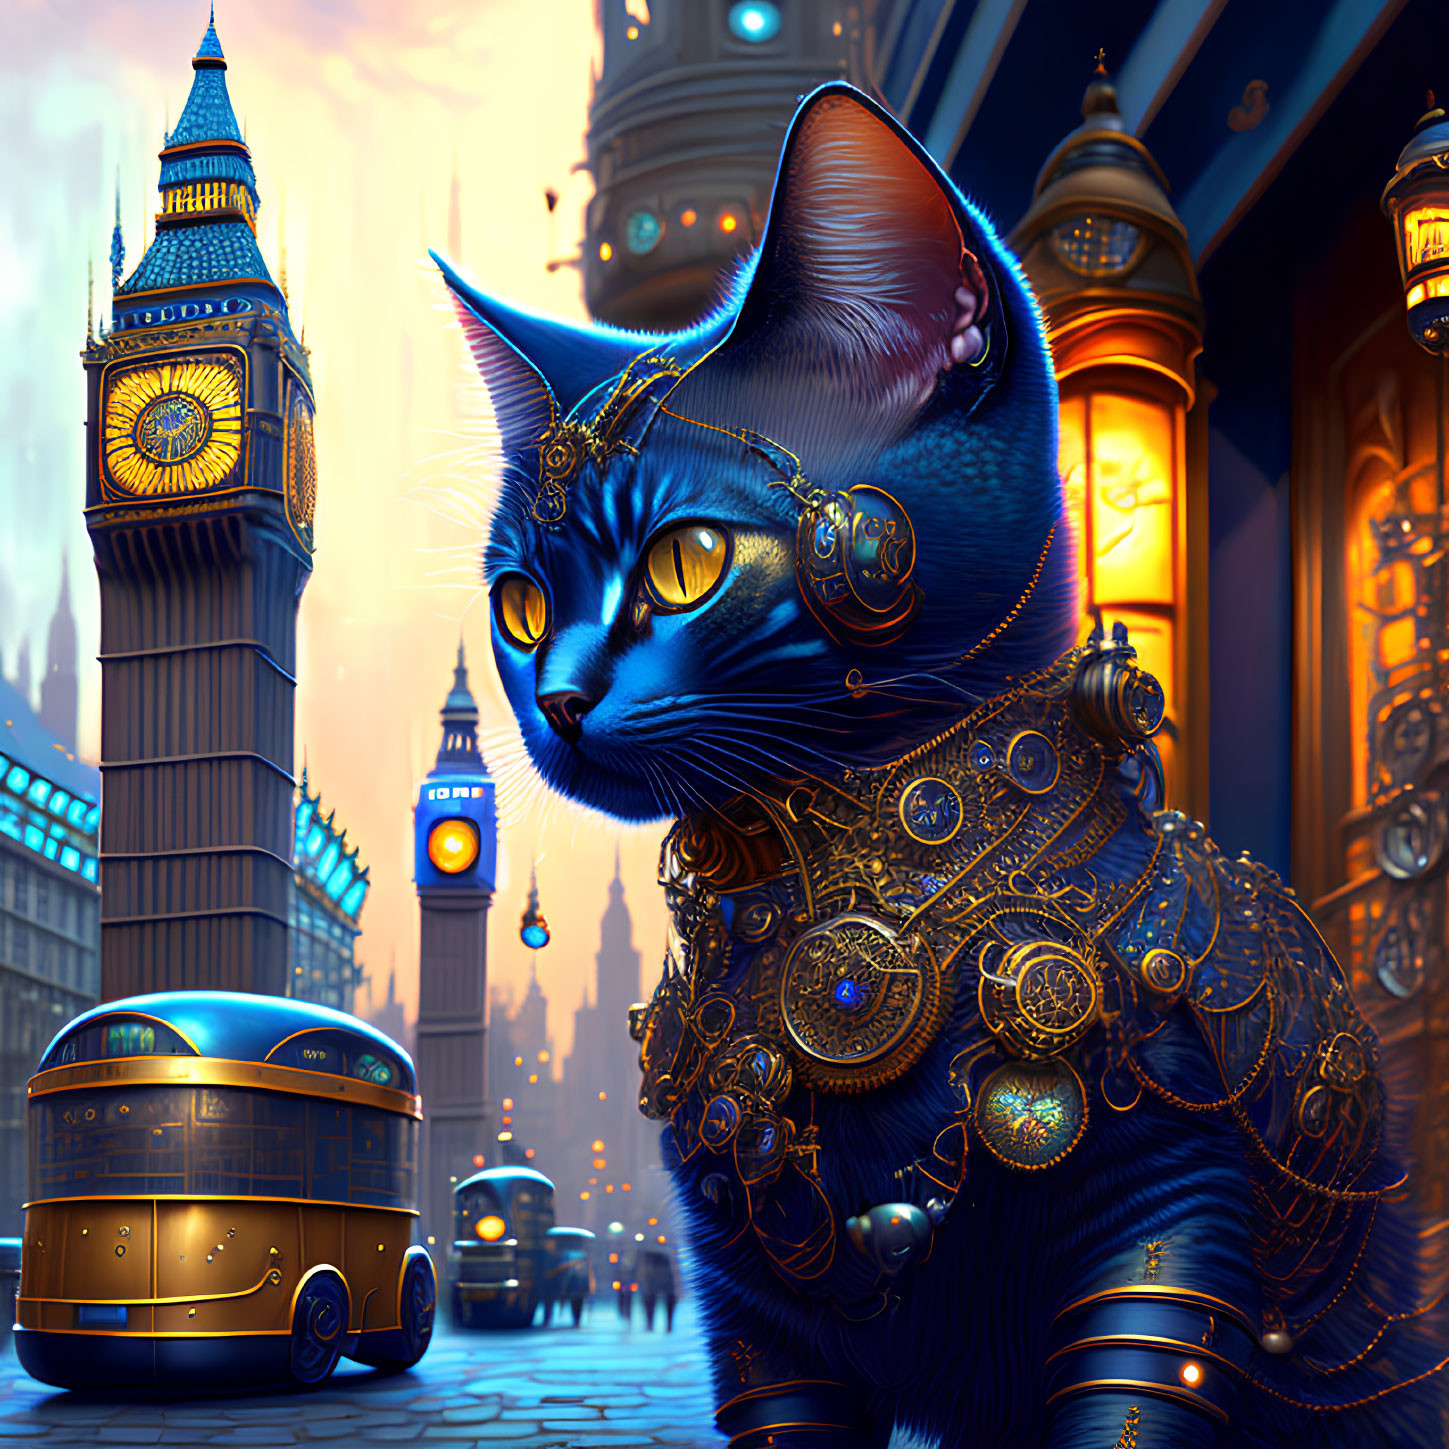 Steampunk-style cat with brass gear attire in cityscape scene